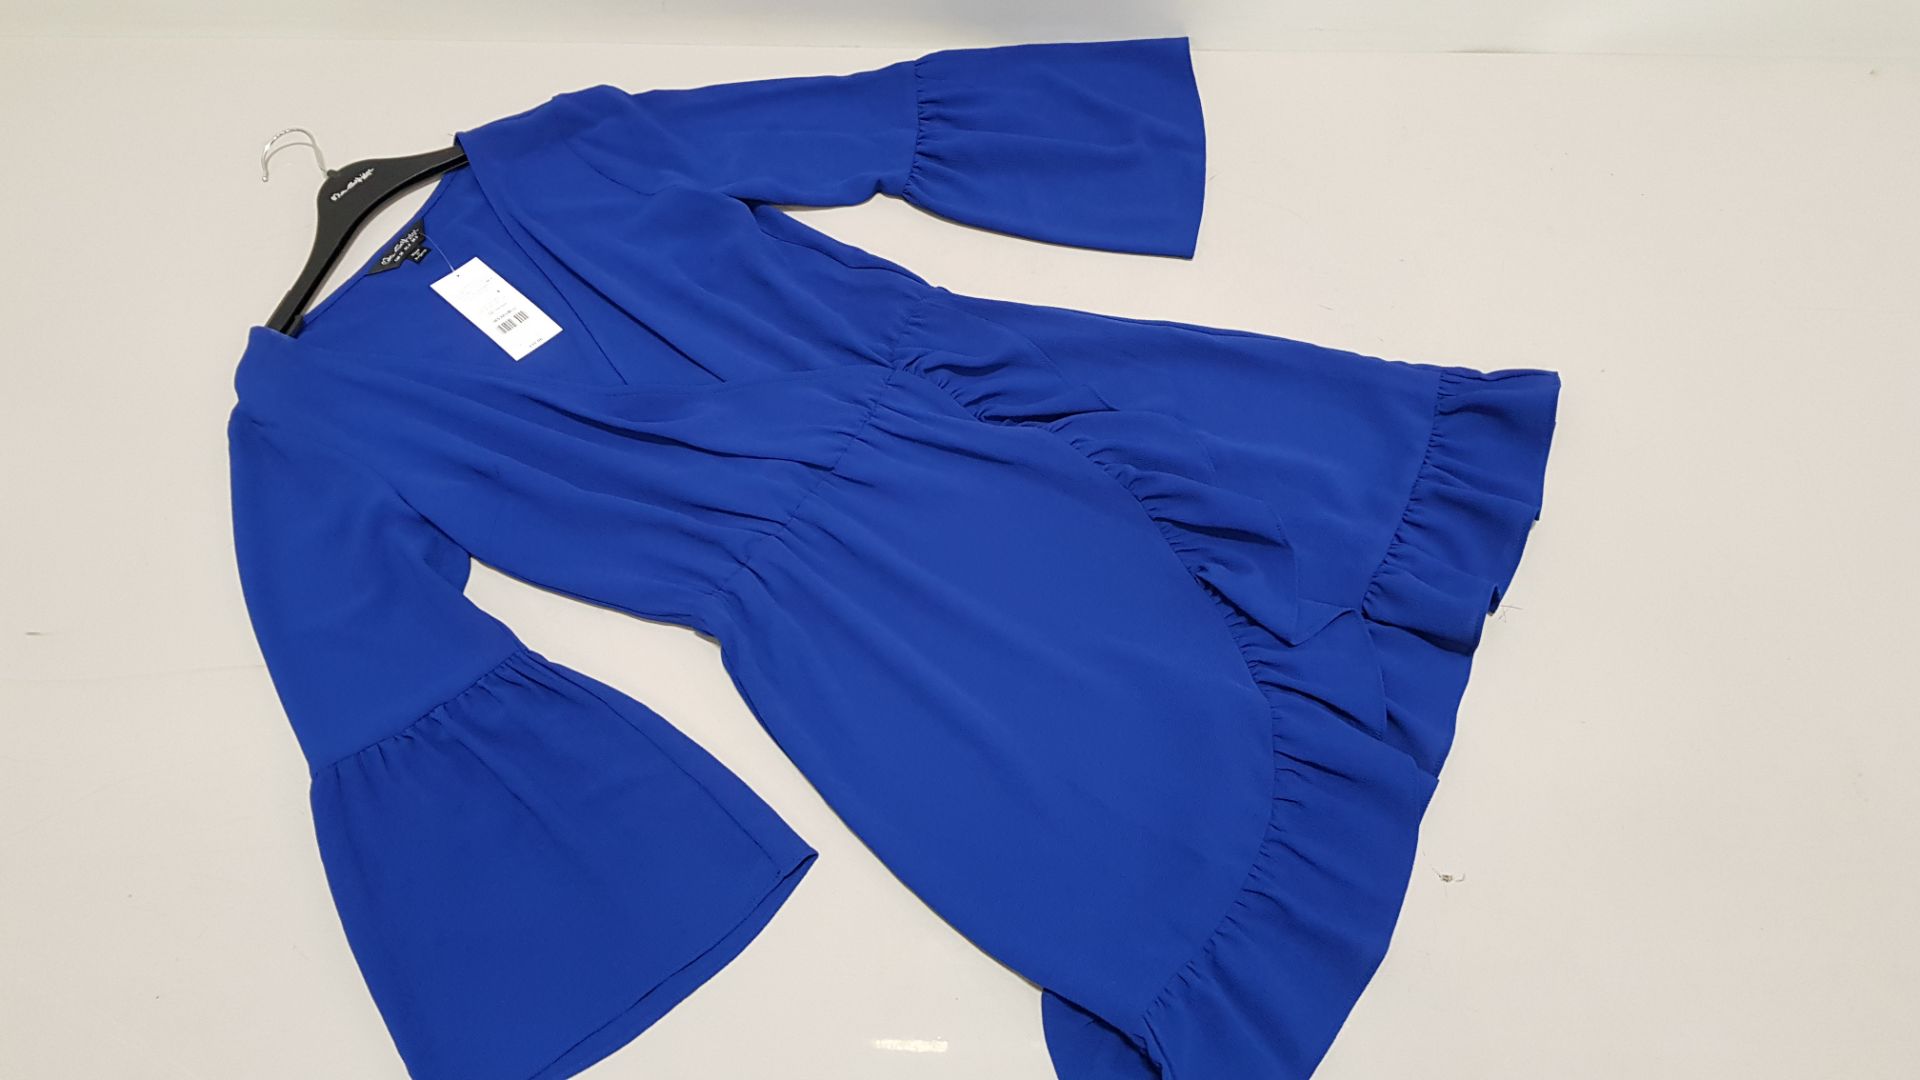 14 X BRAND NEW MISS SELFRIDGE BLUE DRESSES UK SIZE 12 RRP £35.00 (TOTAL RRP £490.00)